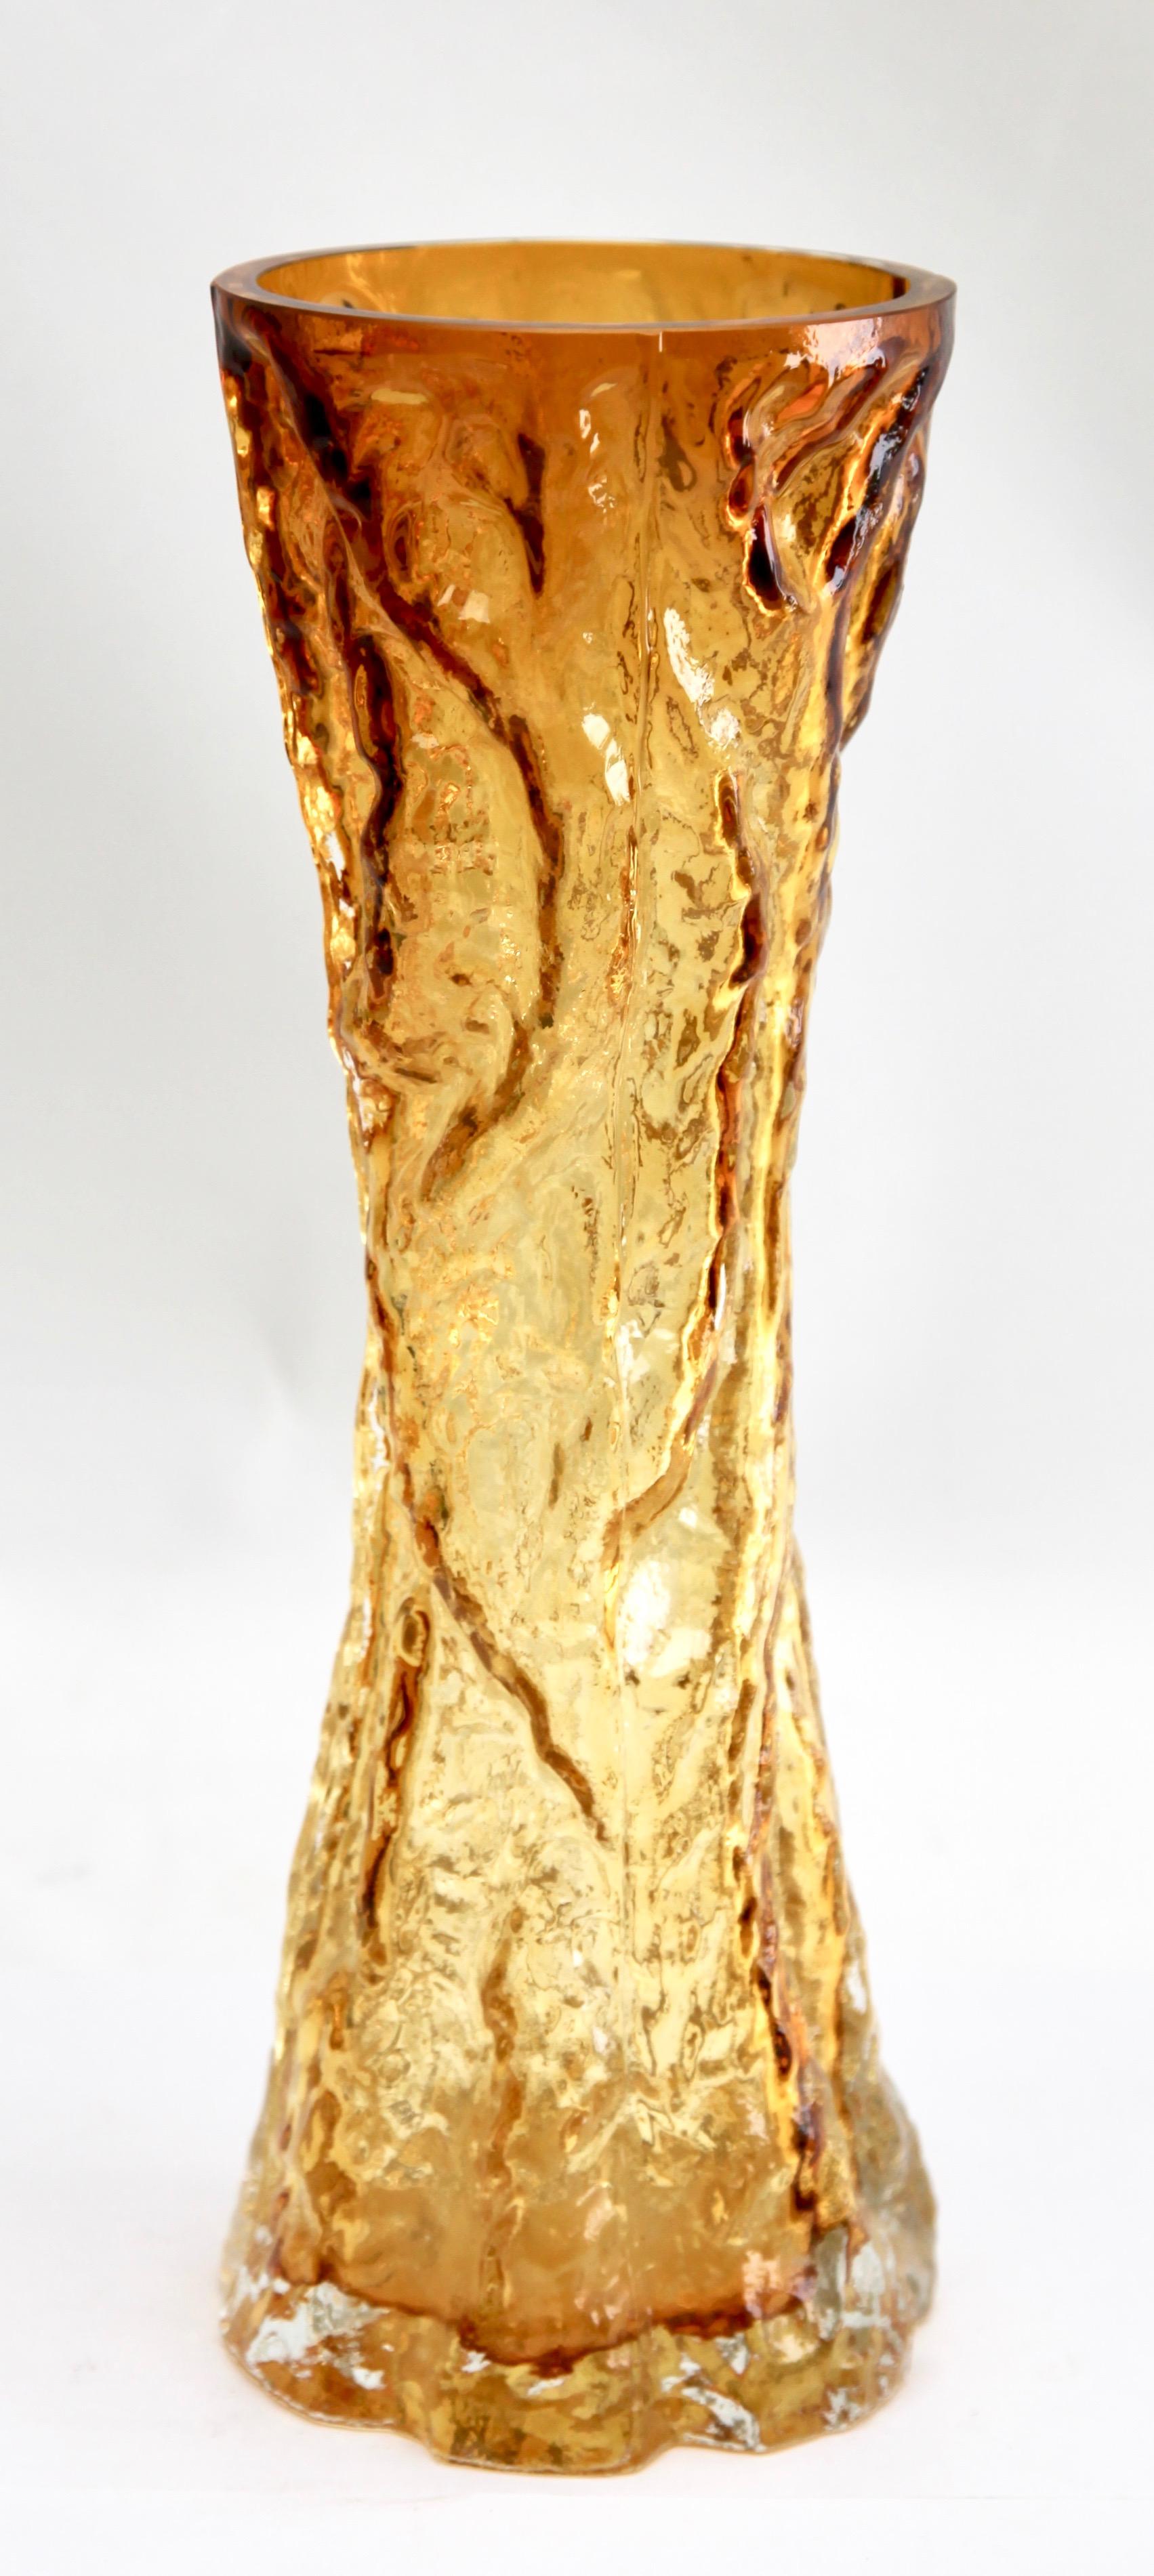 Molded Ingrid Glas ‘Germany’ Set of Bark Vases in Amber, 1970s